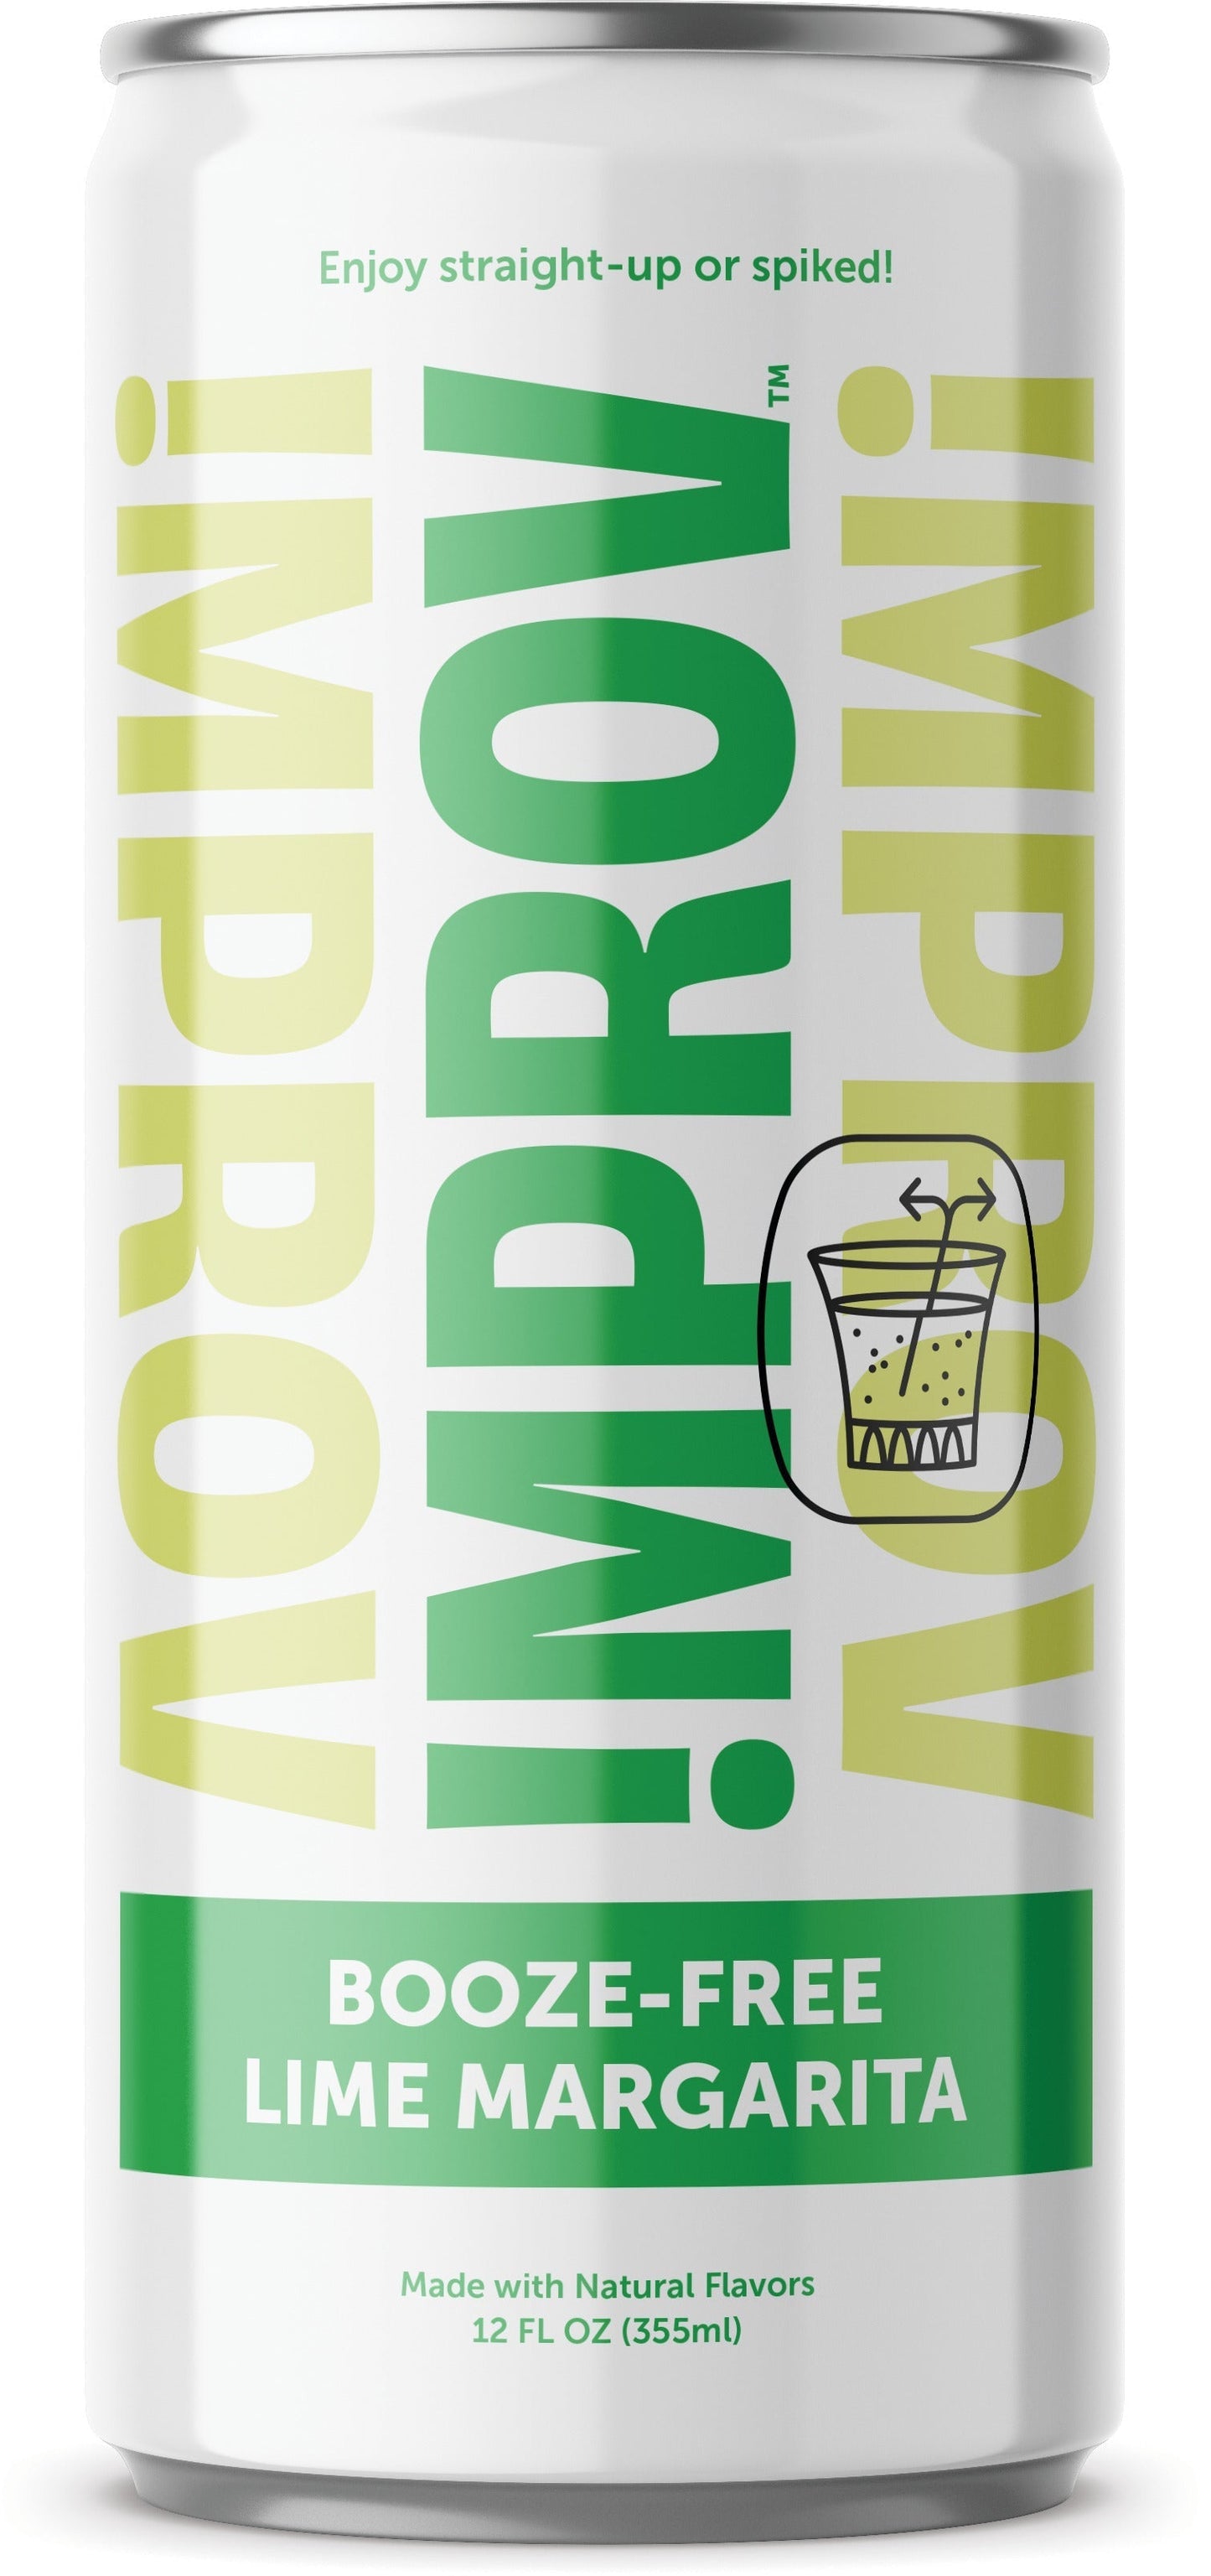 !MPROV Booze-Free Lime Margarita, 4 pack